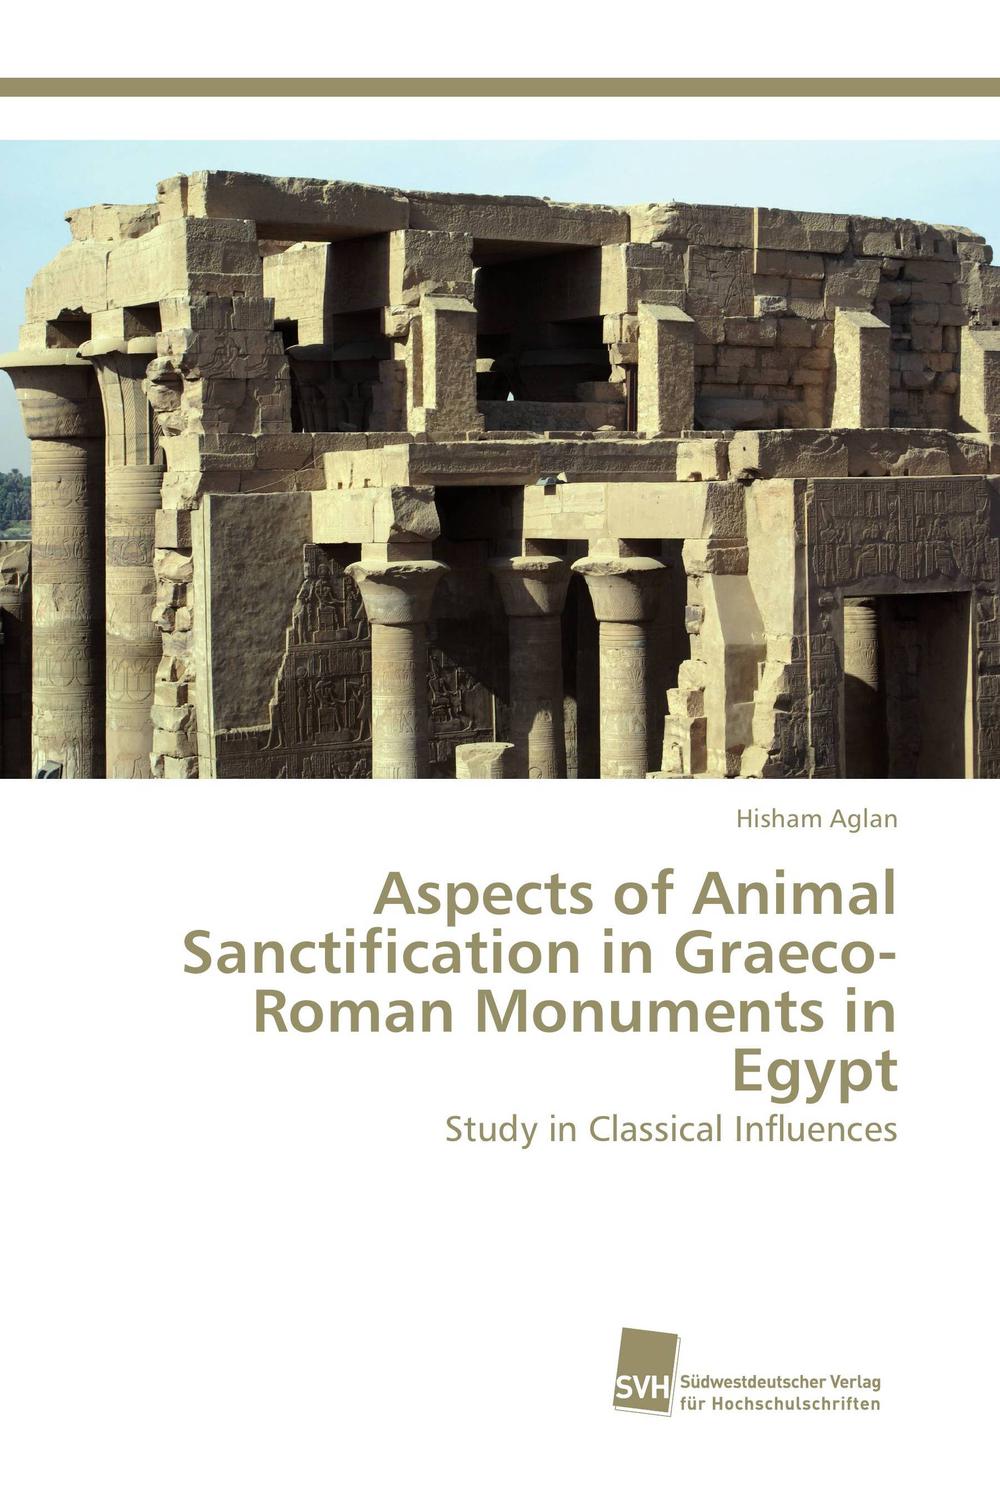 Aspects of Animal Sanctification in Graeco-Roman Monuments in Egypt - Hisham Aglan